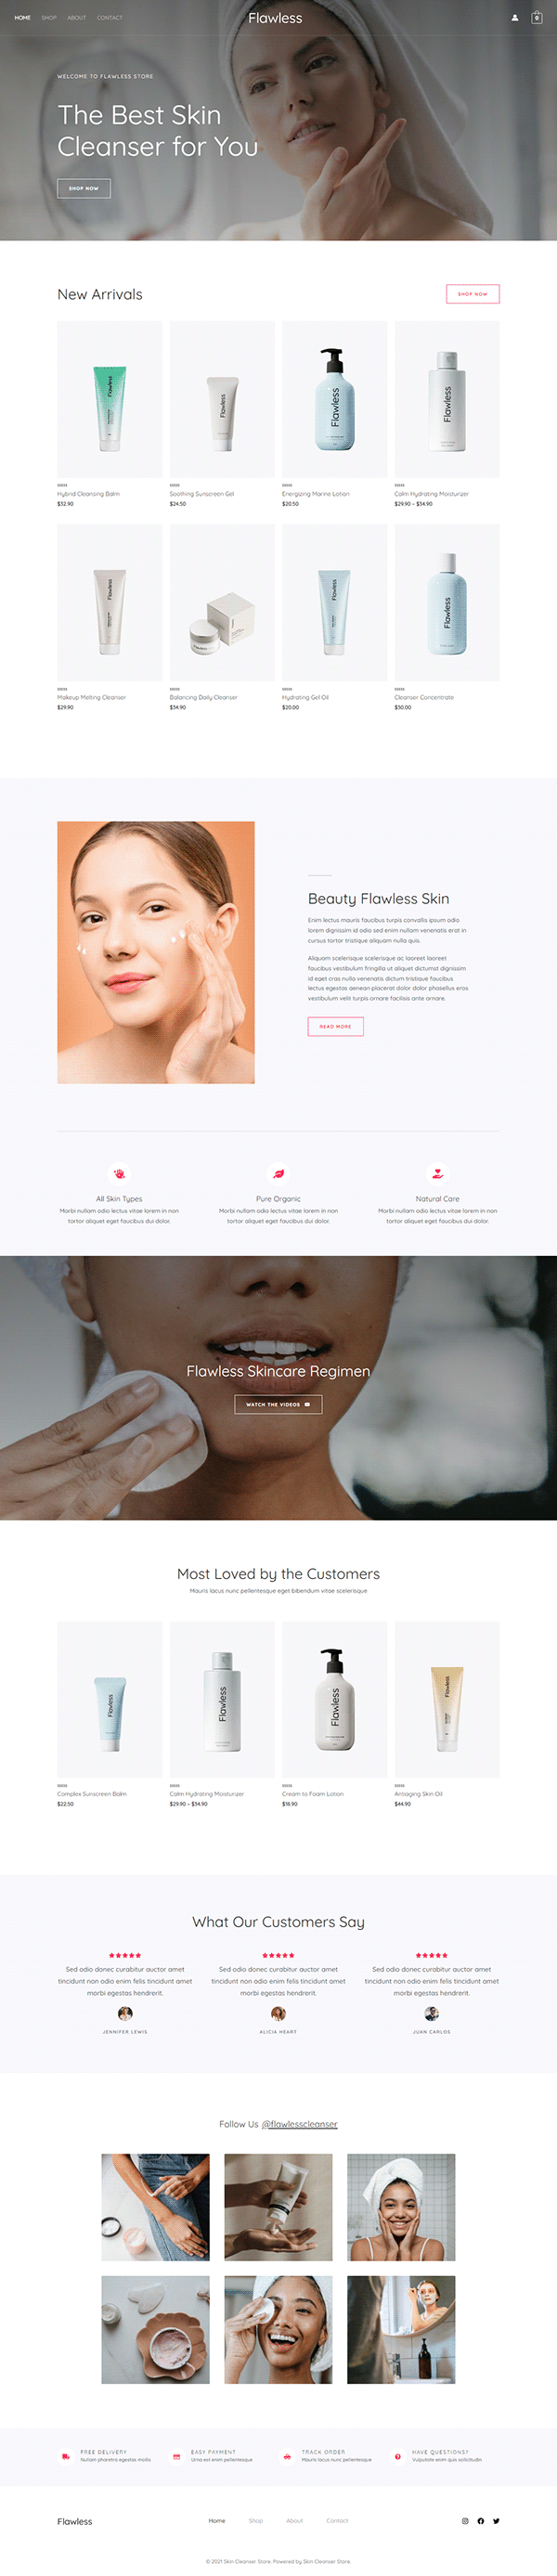 Skin Care Landing Page Website Design in WordPress